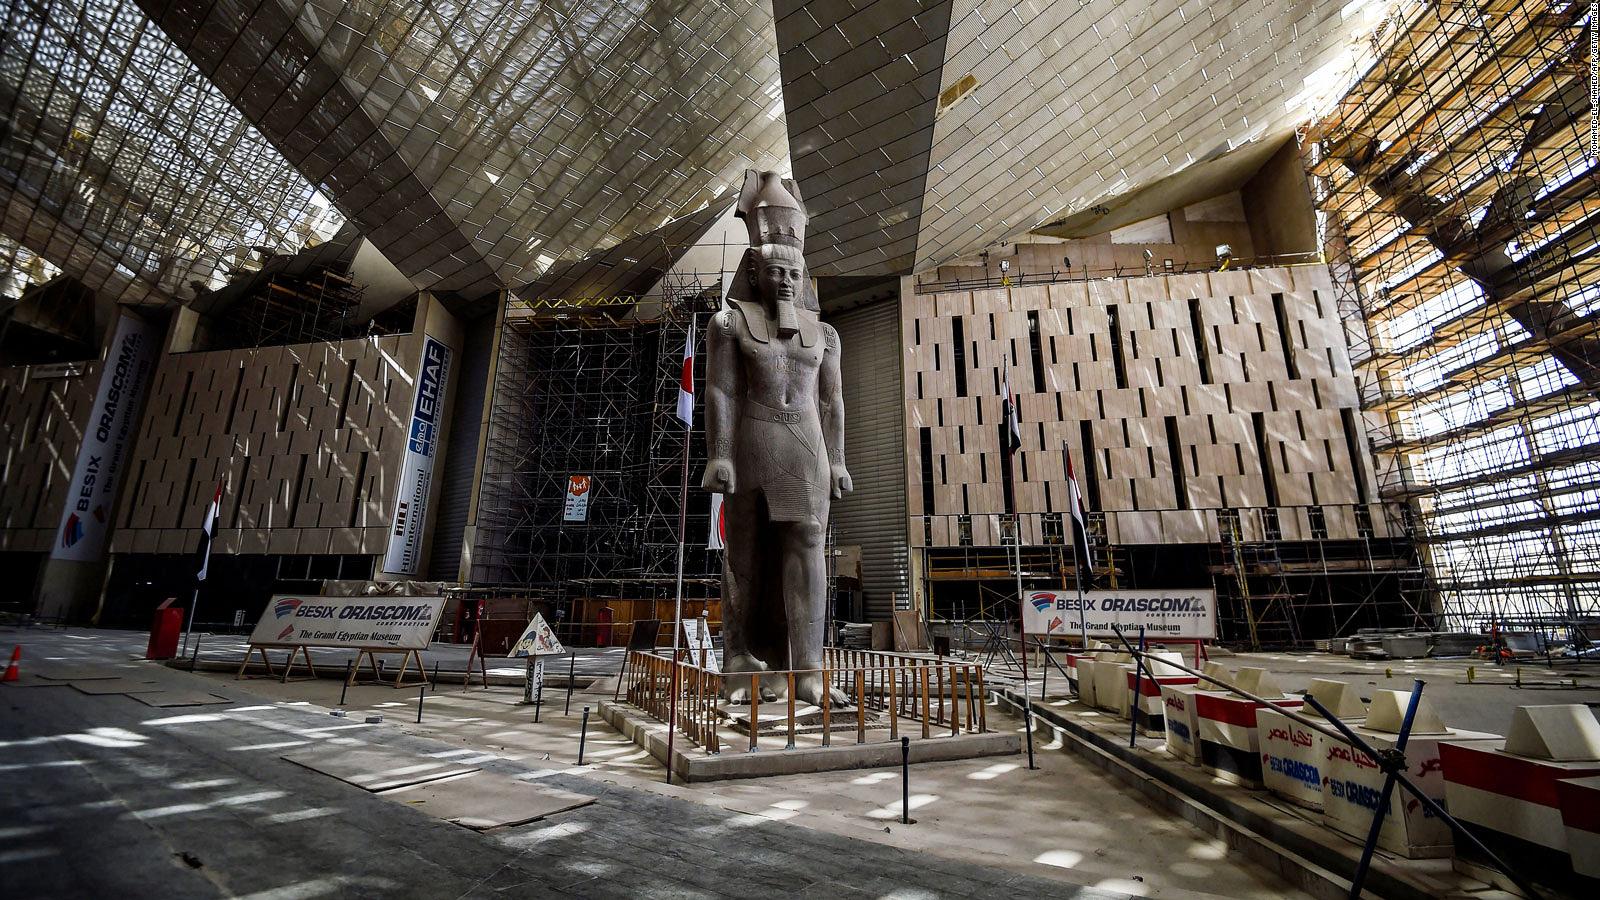 
Grand Egyptian Museum